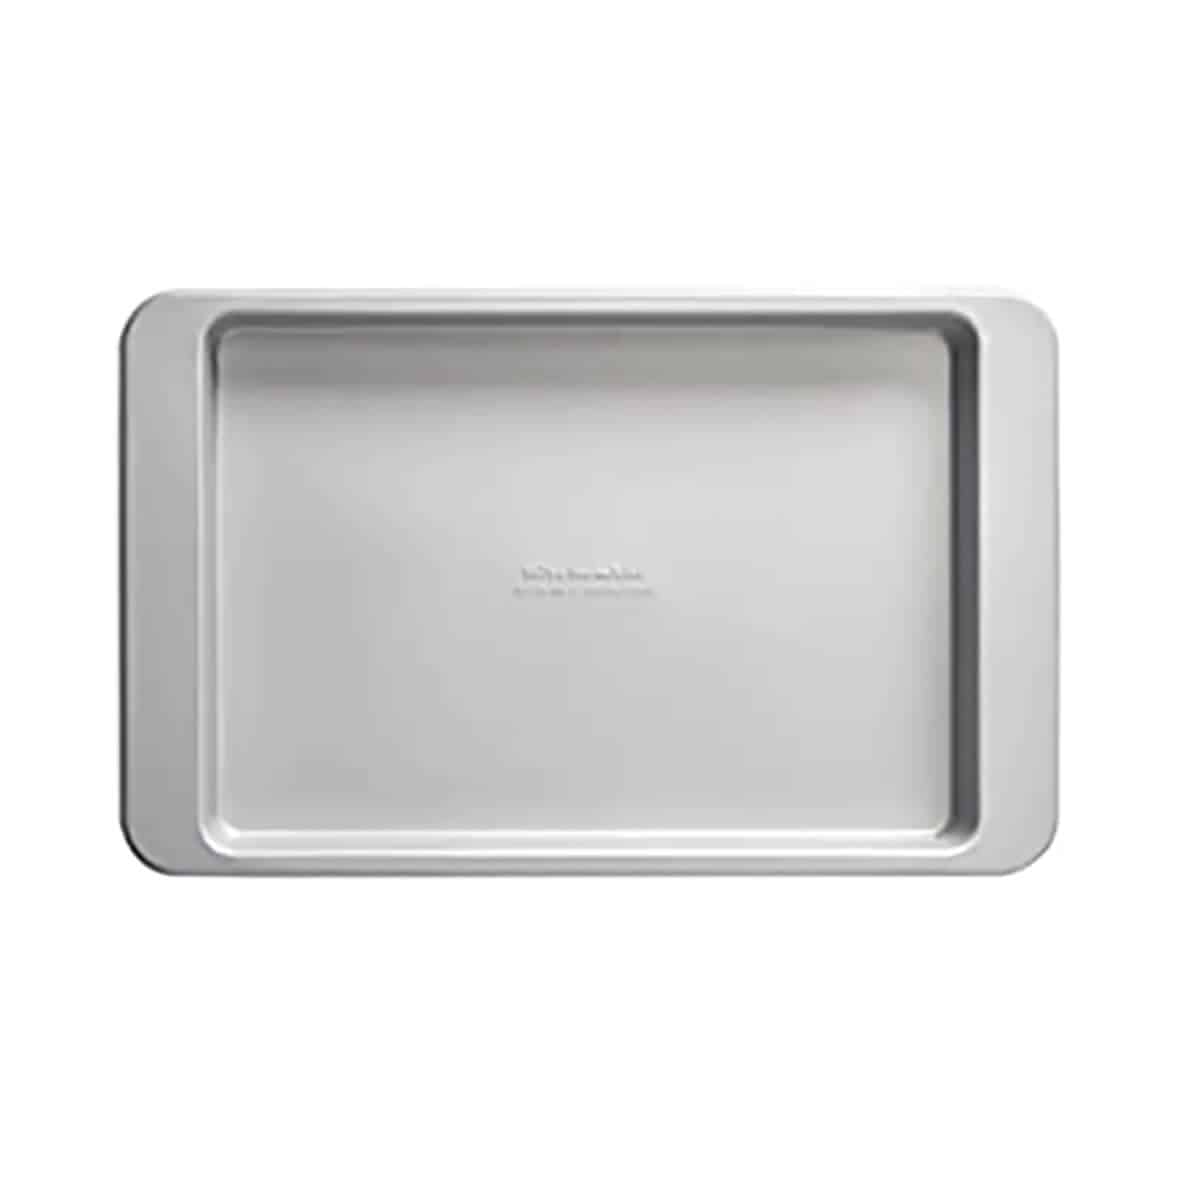 our favorite rectangular silver baking tray.